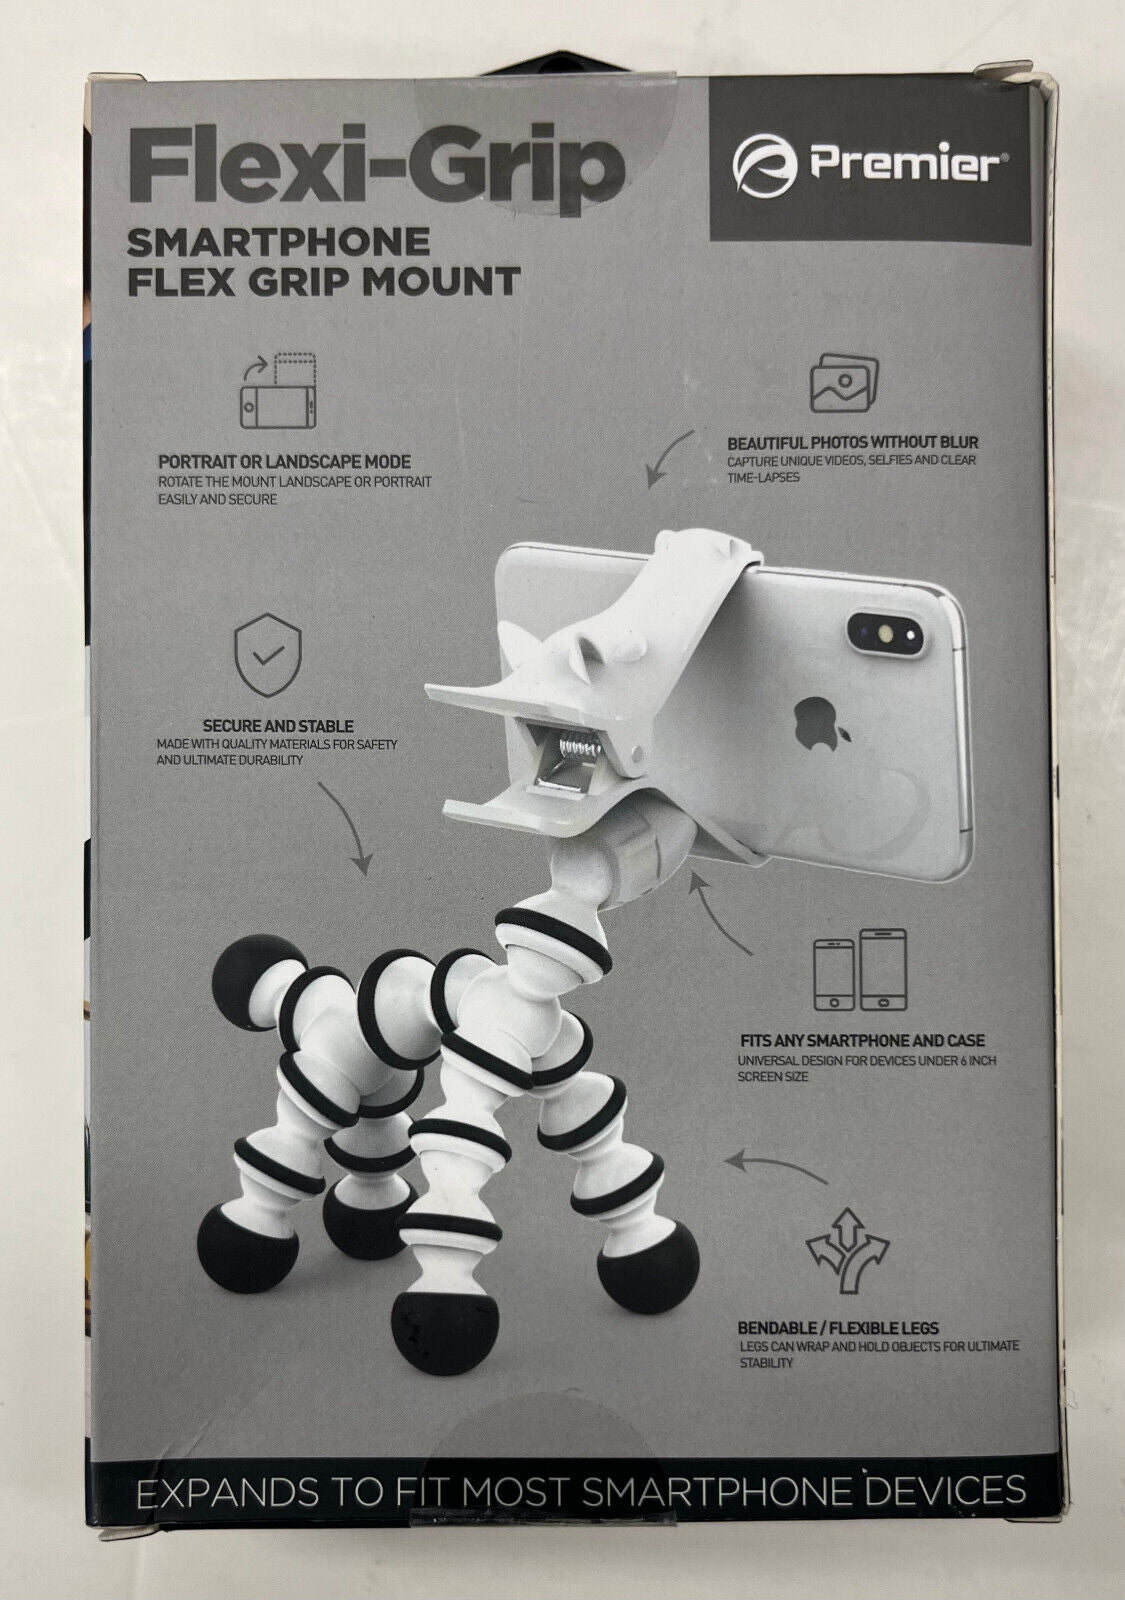 2-Pack Deal: Premier Flexi-Grip Smartphone Flex Grip Mount (WM-PFLEX1BK)